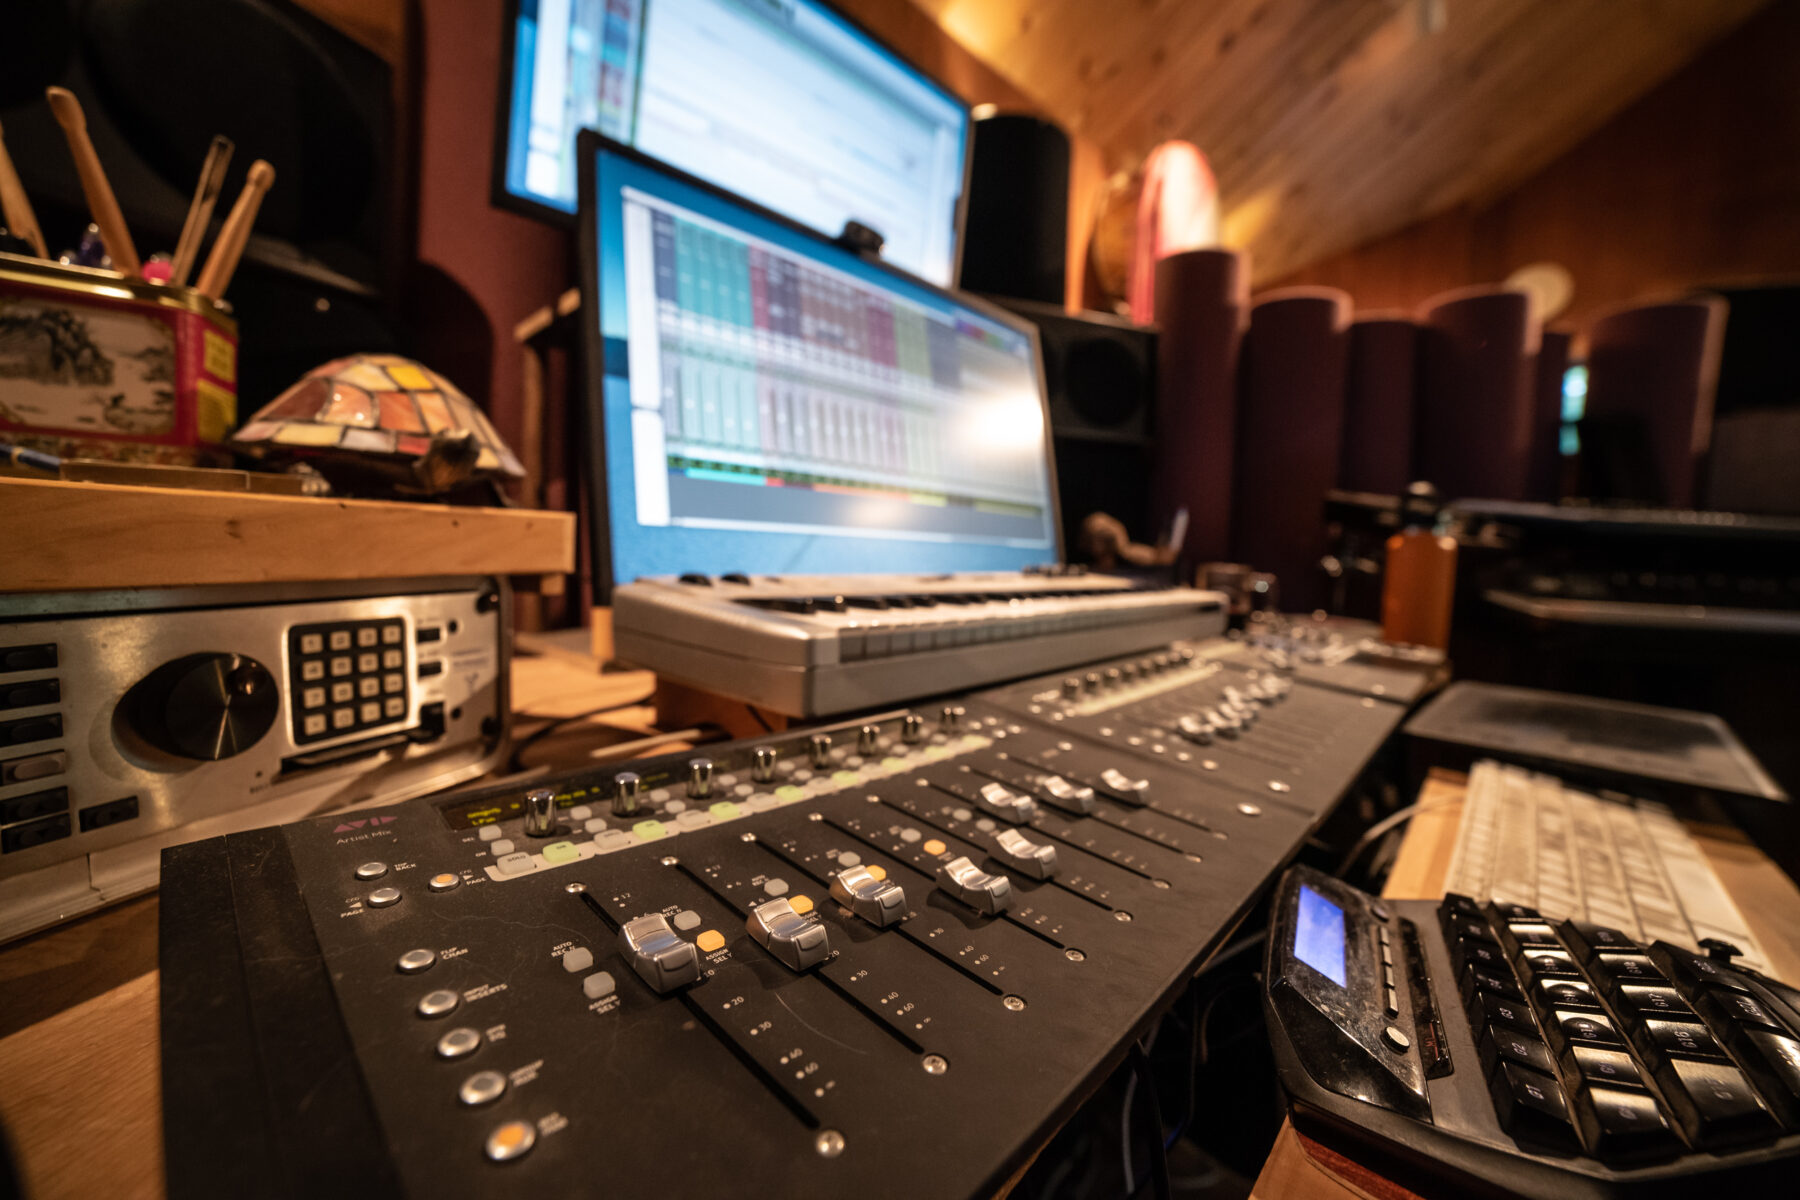 Audio mixing board and gear at Possum Hall recording studio in Carlisle, MA